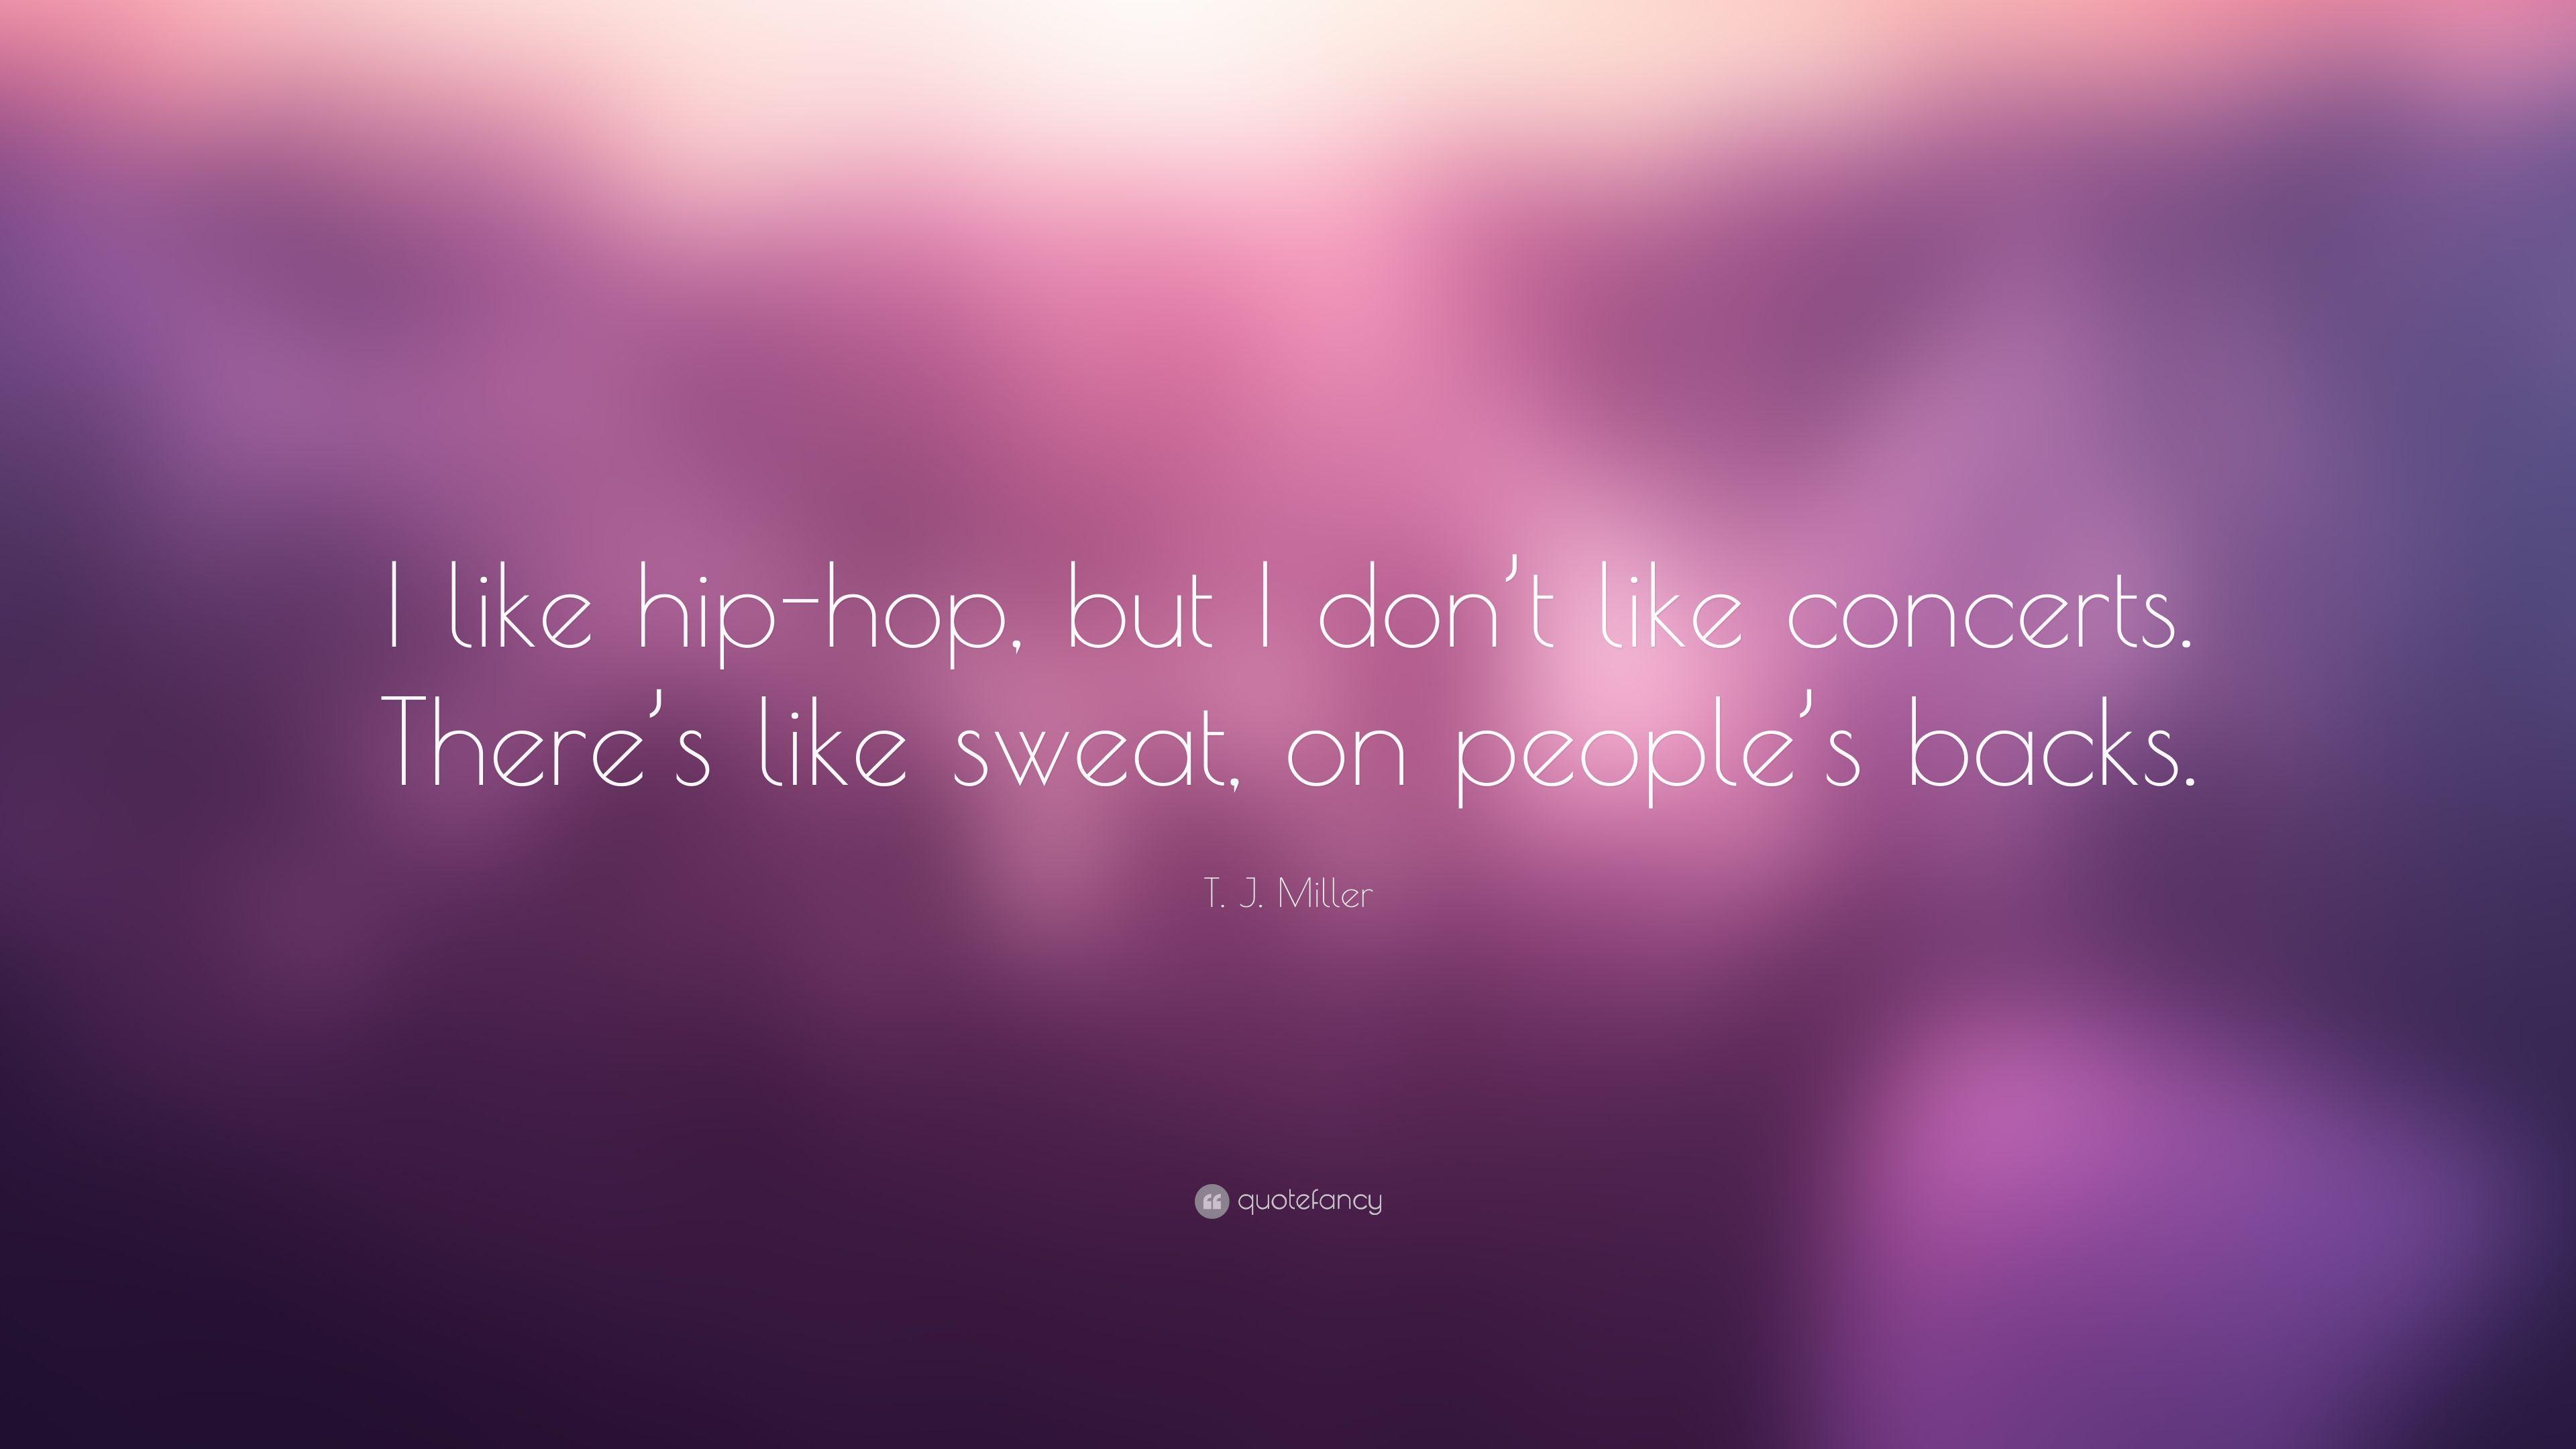 T. J. Miller Quote: “I Like Hip Hop, But I Don't Like Concerts